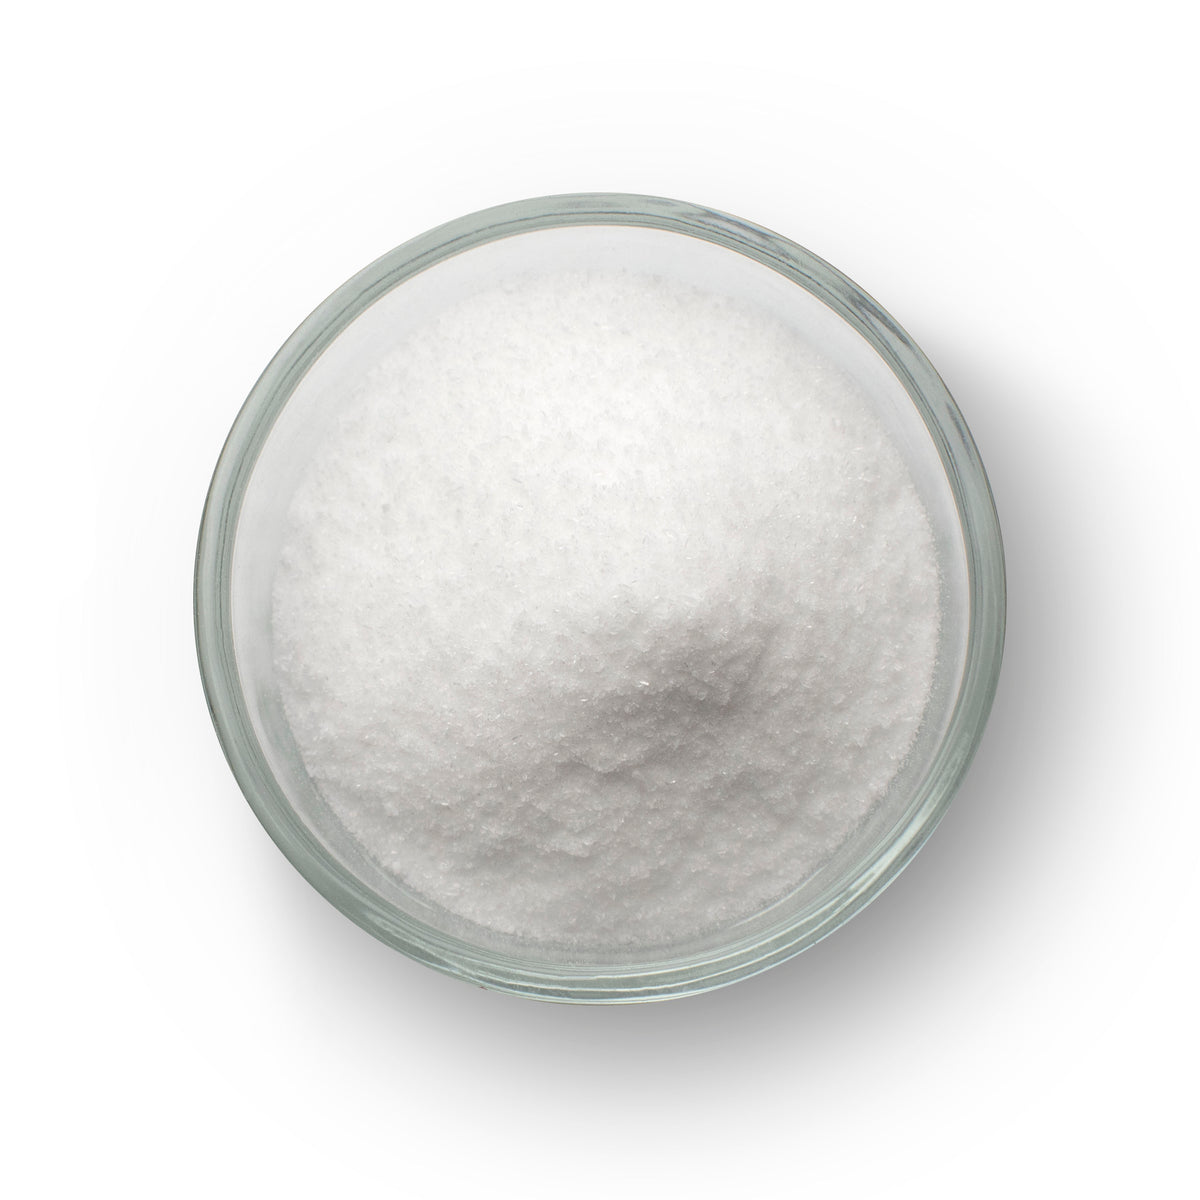 EDTA - Tetrasodium Tetrahydrate Salt